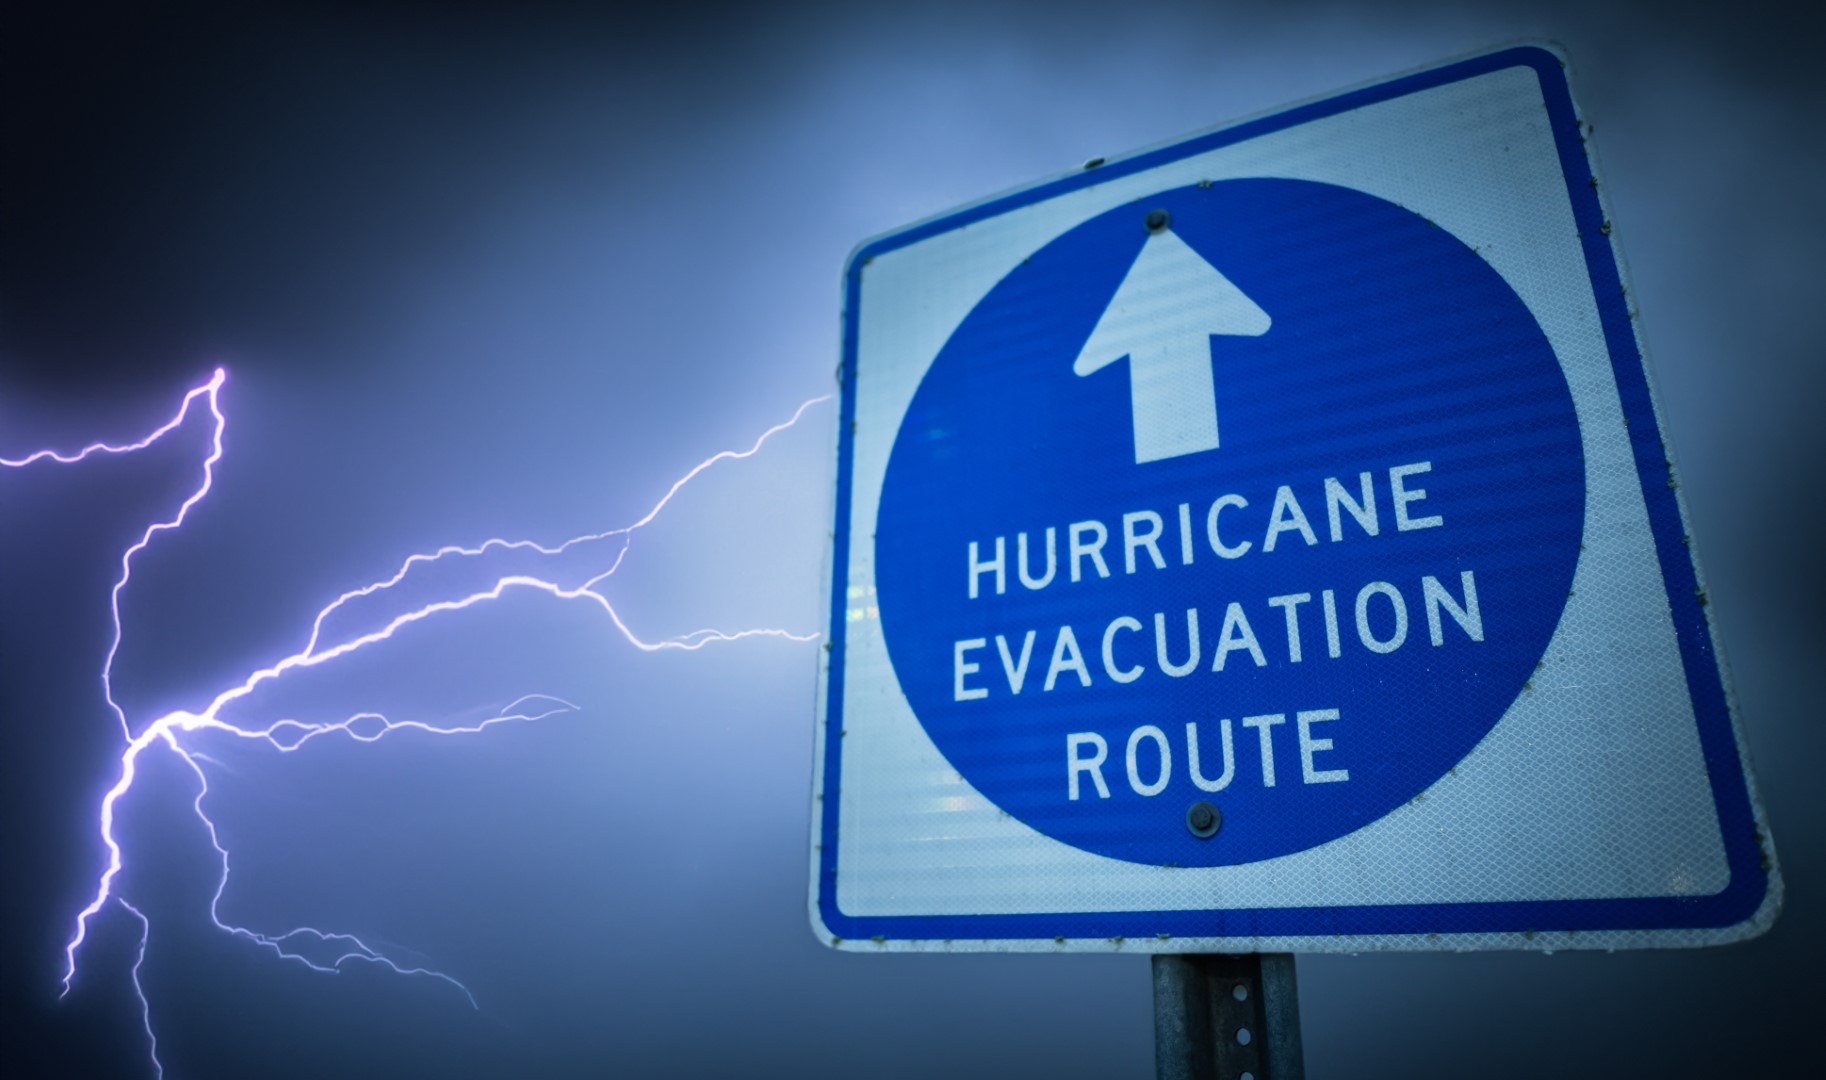 Hurricane Evacuation Route Sign